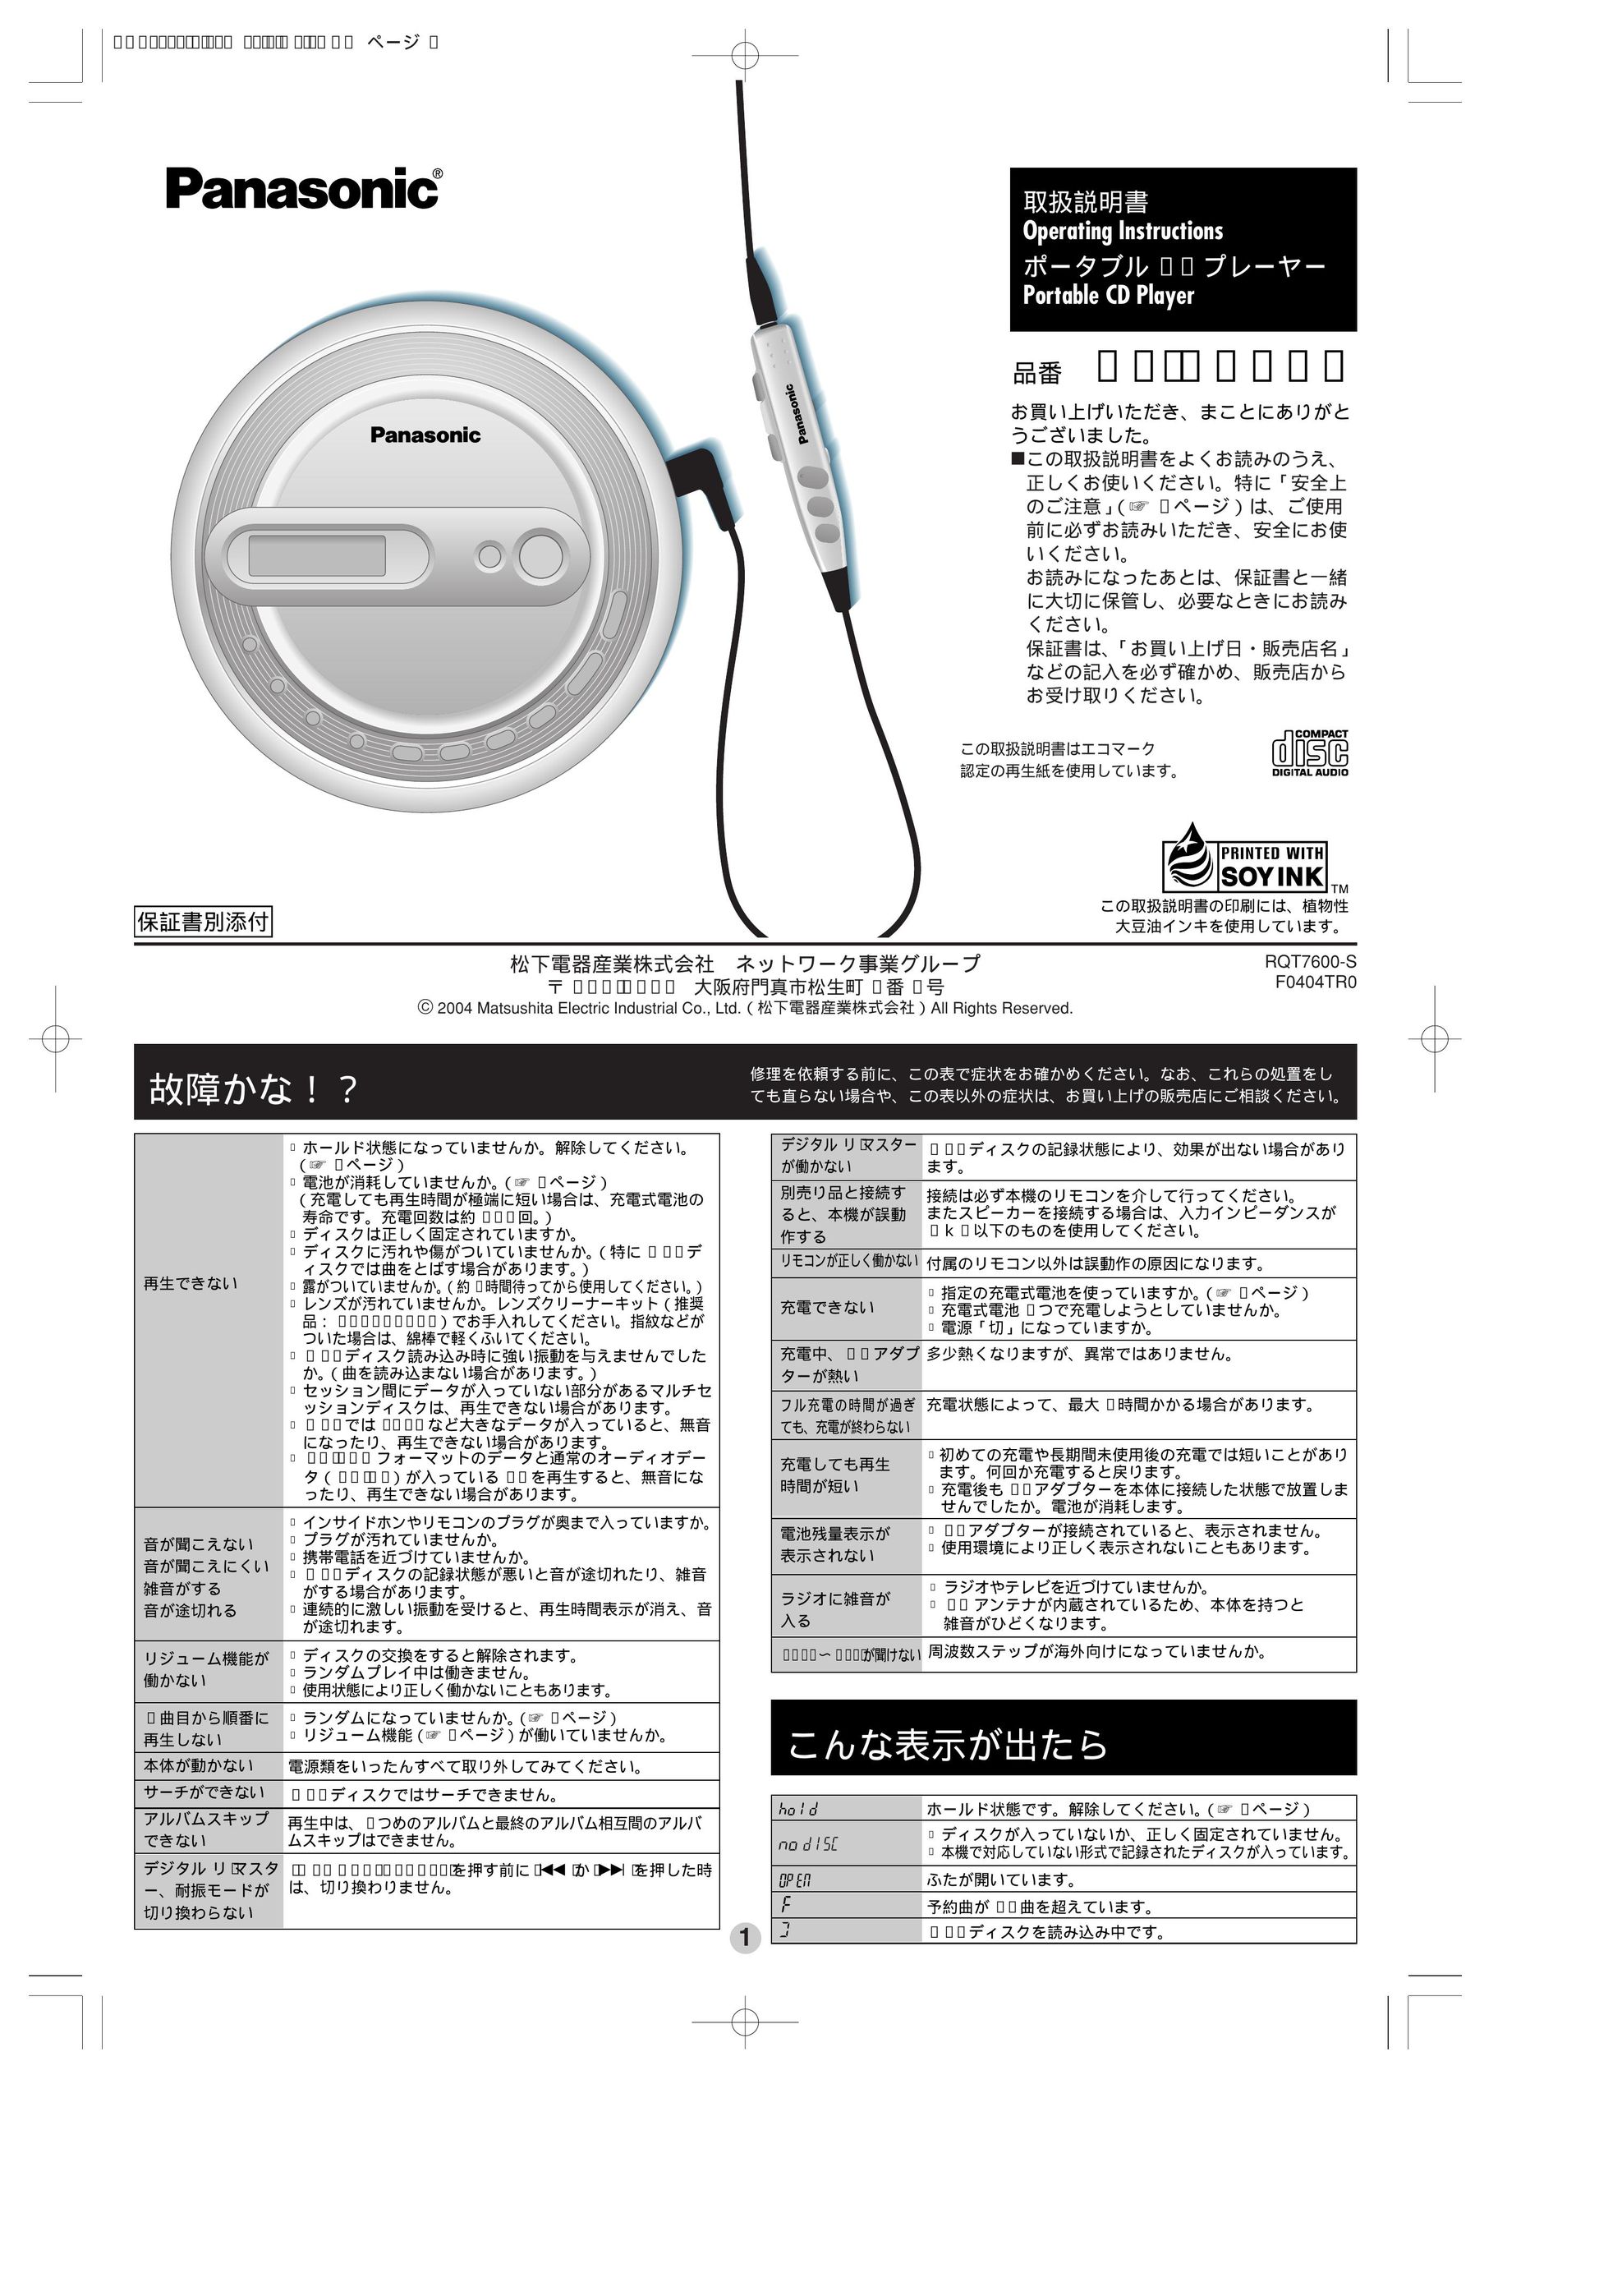 Panasonic RQT7600-S Portable CD Player User Manual